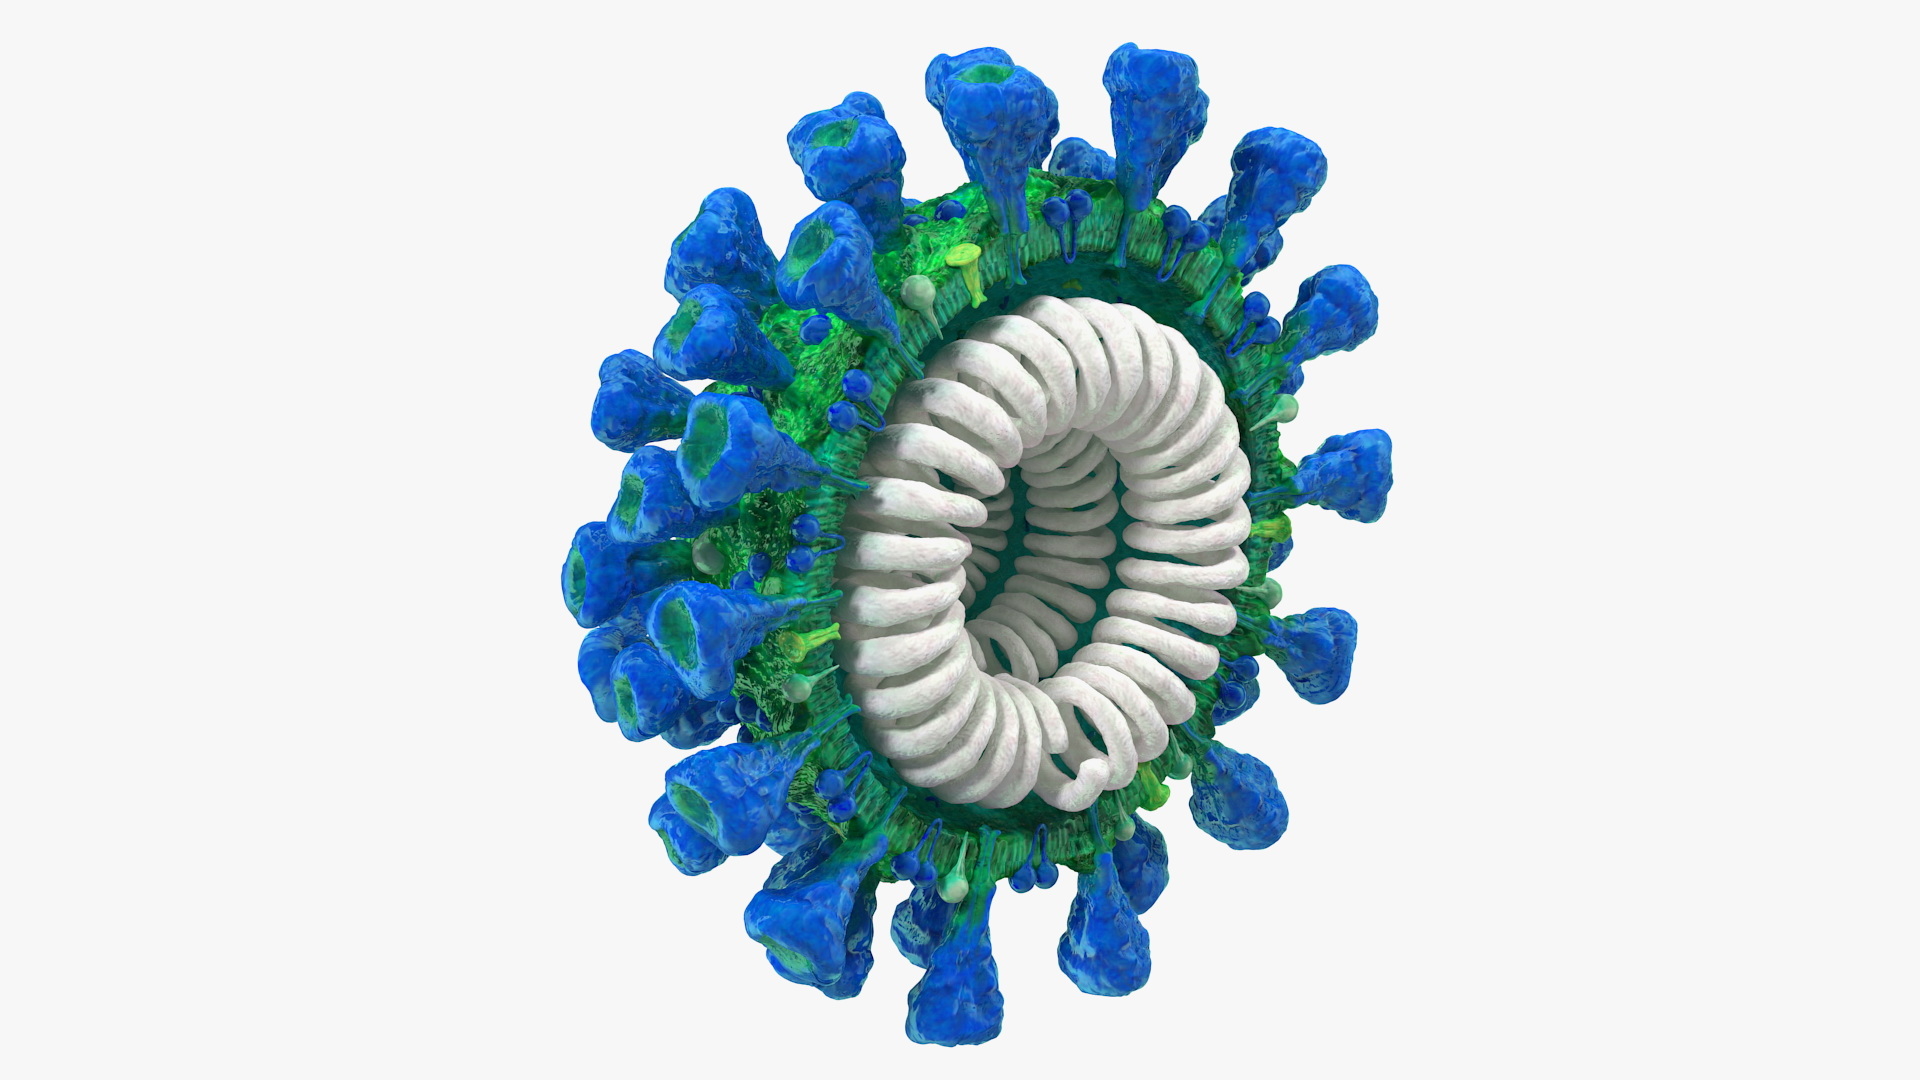 CoronavirusMERSCoVCrossSection3dmodel001.jpgB5FE2533-EE8B-4EFB-B0A3-2BBC1BC52115DefaultHQ.jpg